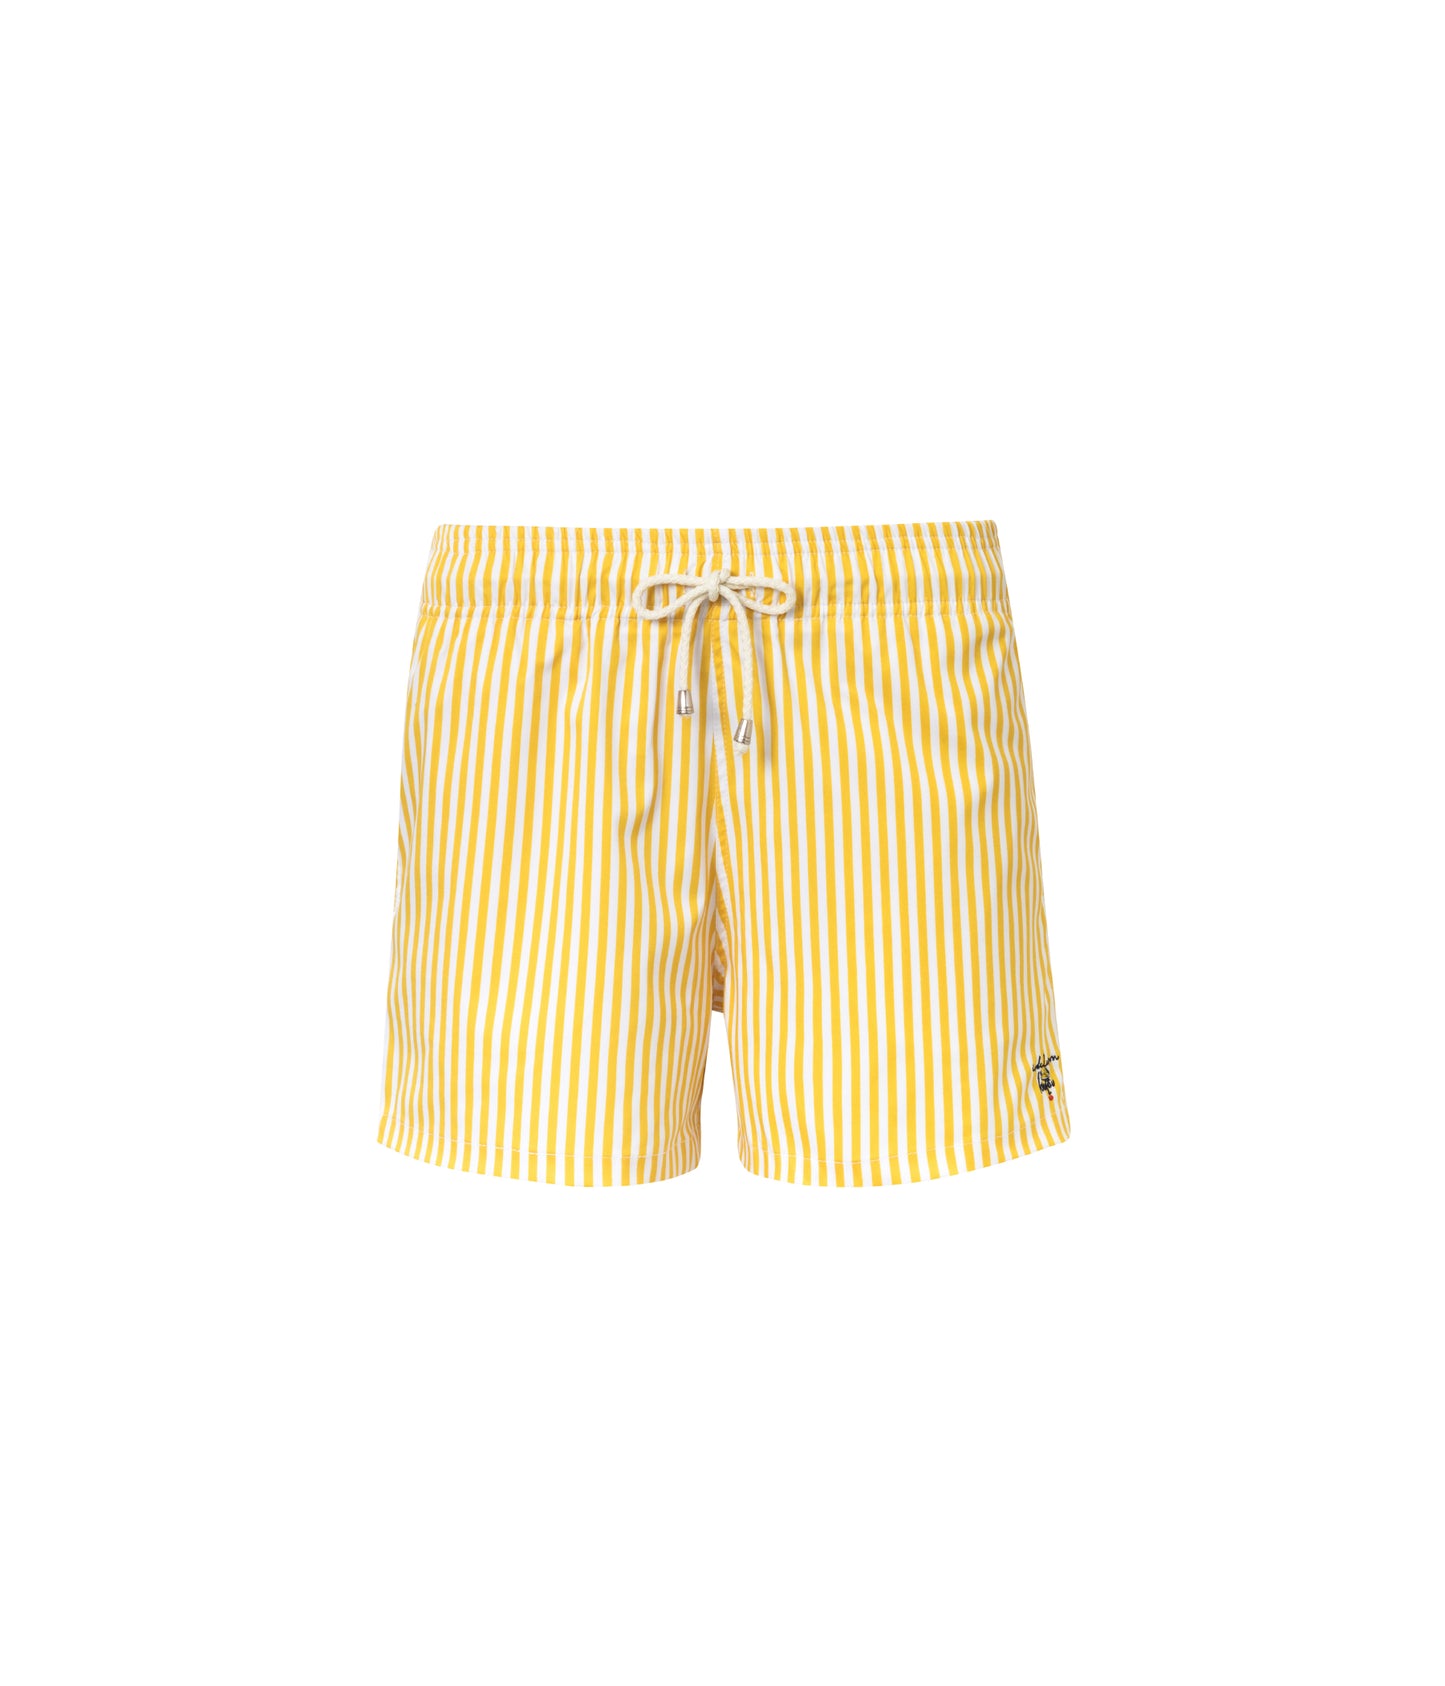 Verdelimon - Swim Trunk - Limones Loulou - Yellow Stripes Loulou - Front